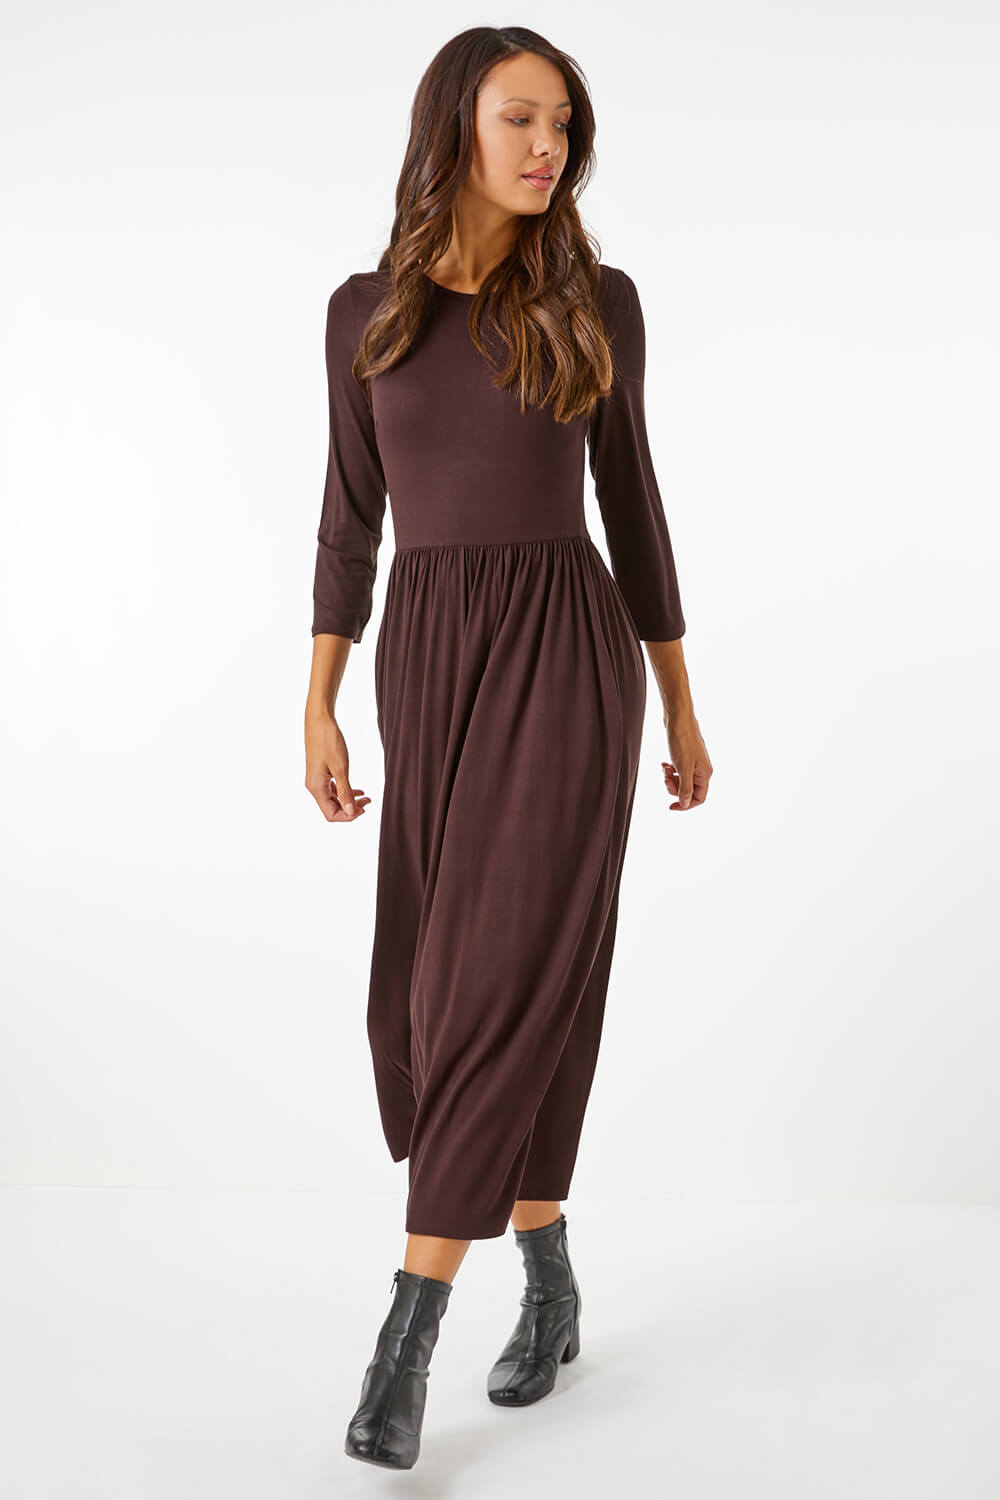 Chocolate Stretch Jersey Pocket Midi Dress, Image 3 of 5